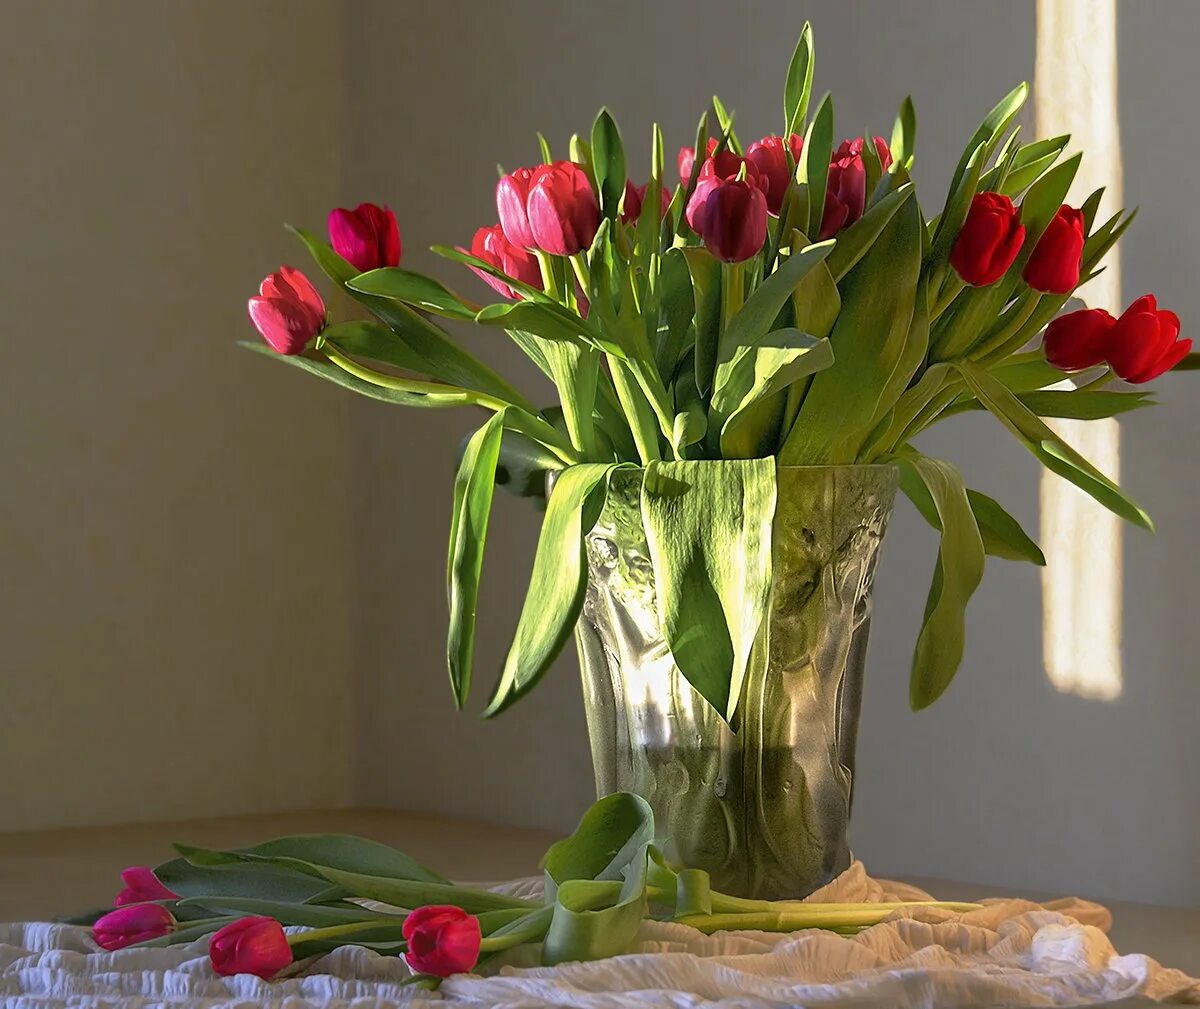 Тюльпаны дома на окне. Букет тюльпанов. Тюльпаны в вазе. Ваза с тюльпанами. Фото тюльпанов в букете дома